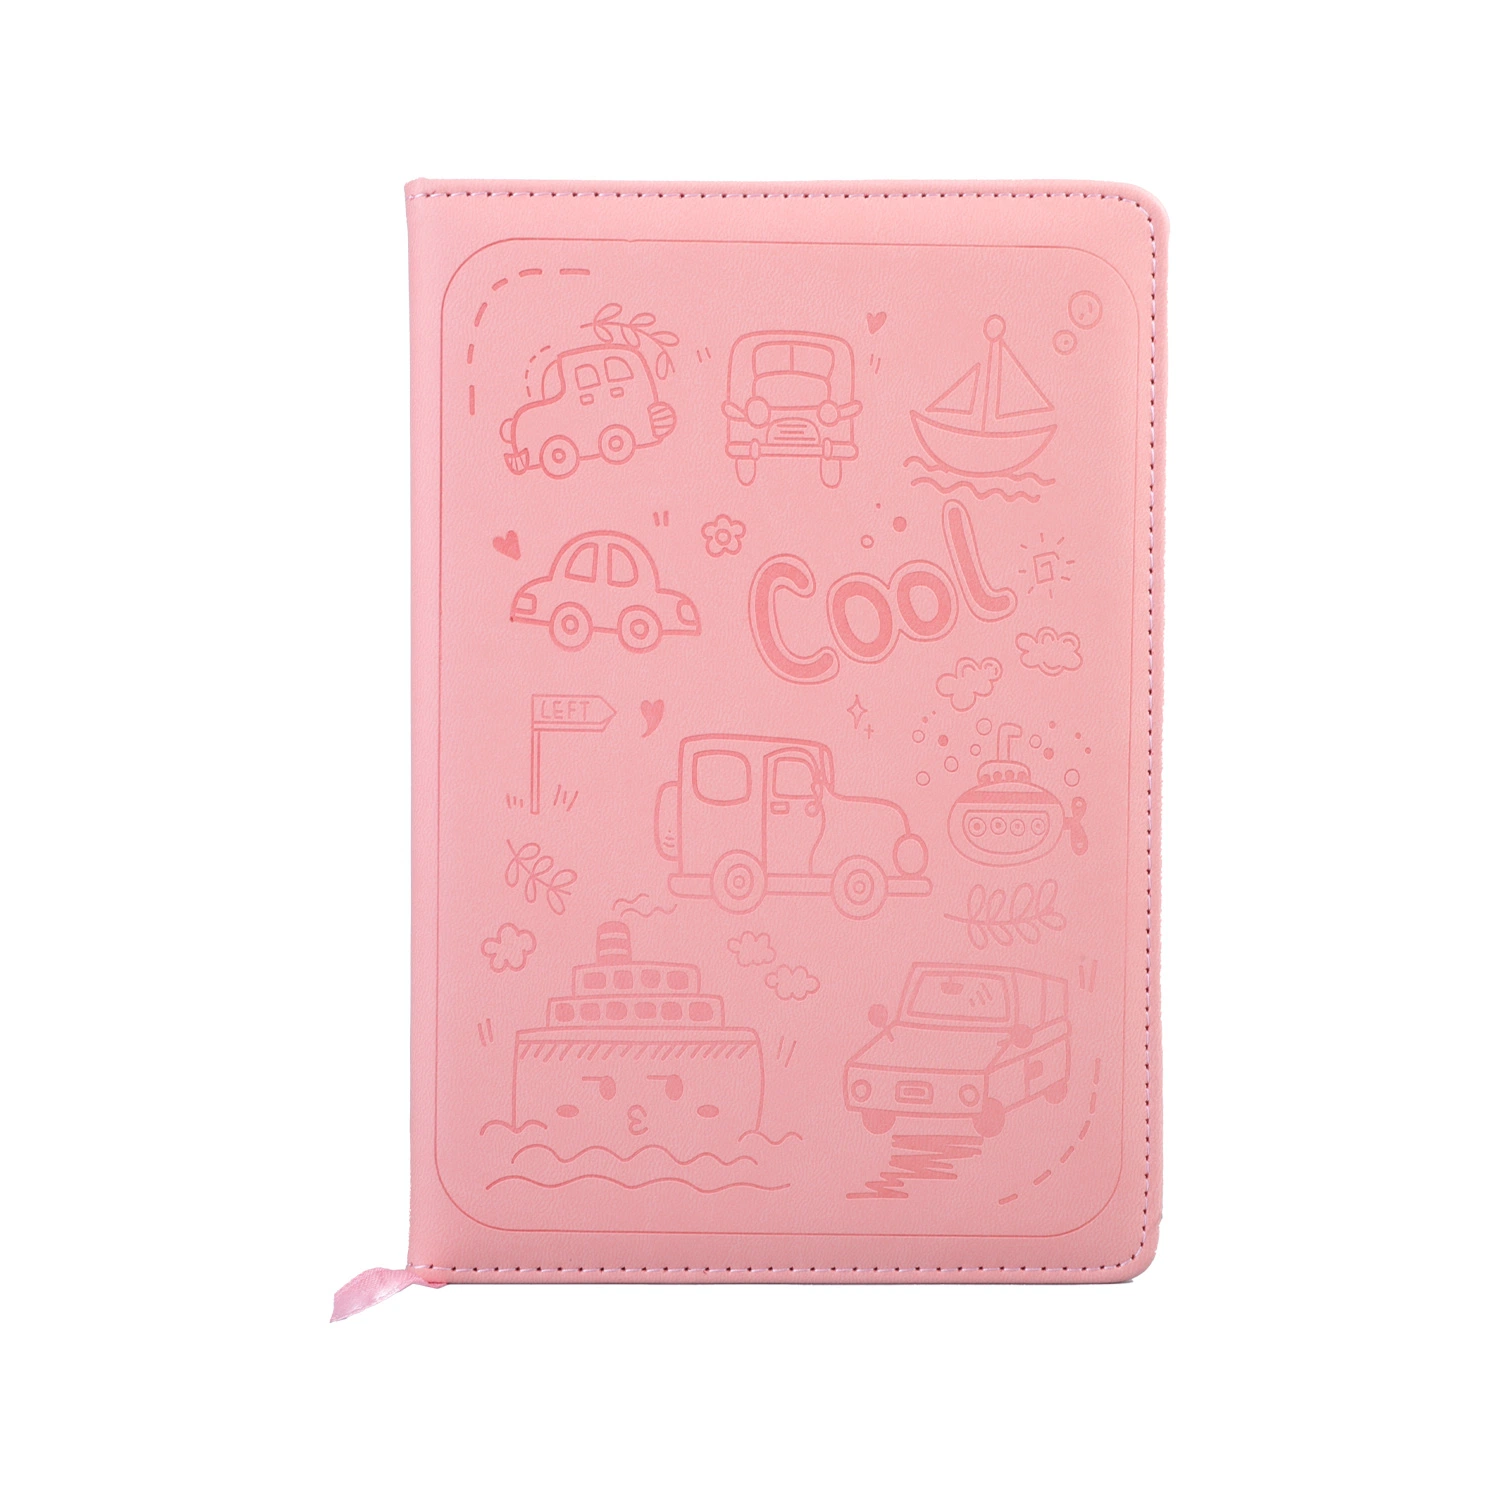 Pink Stationery Paper Hardcover School Notebook с накаткой PU